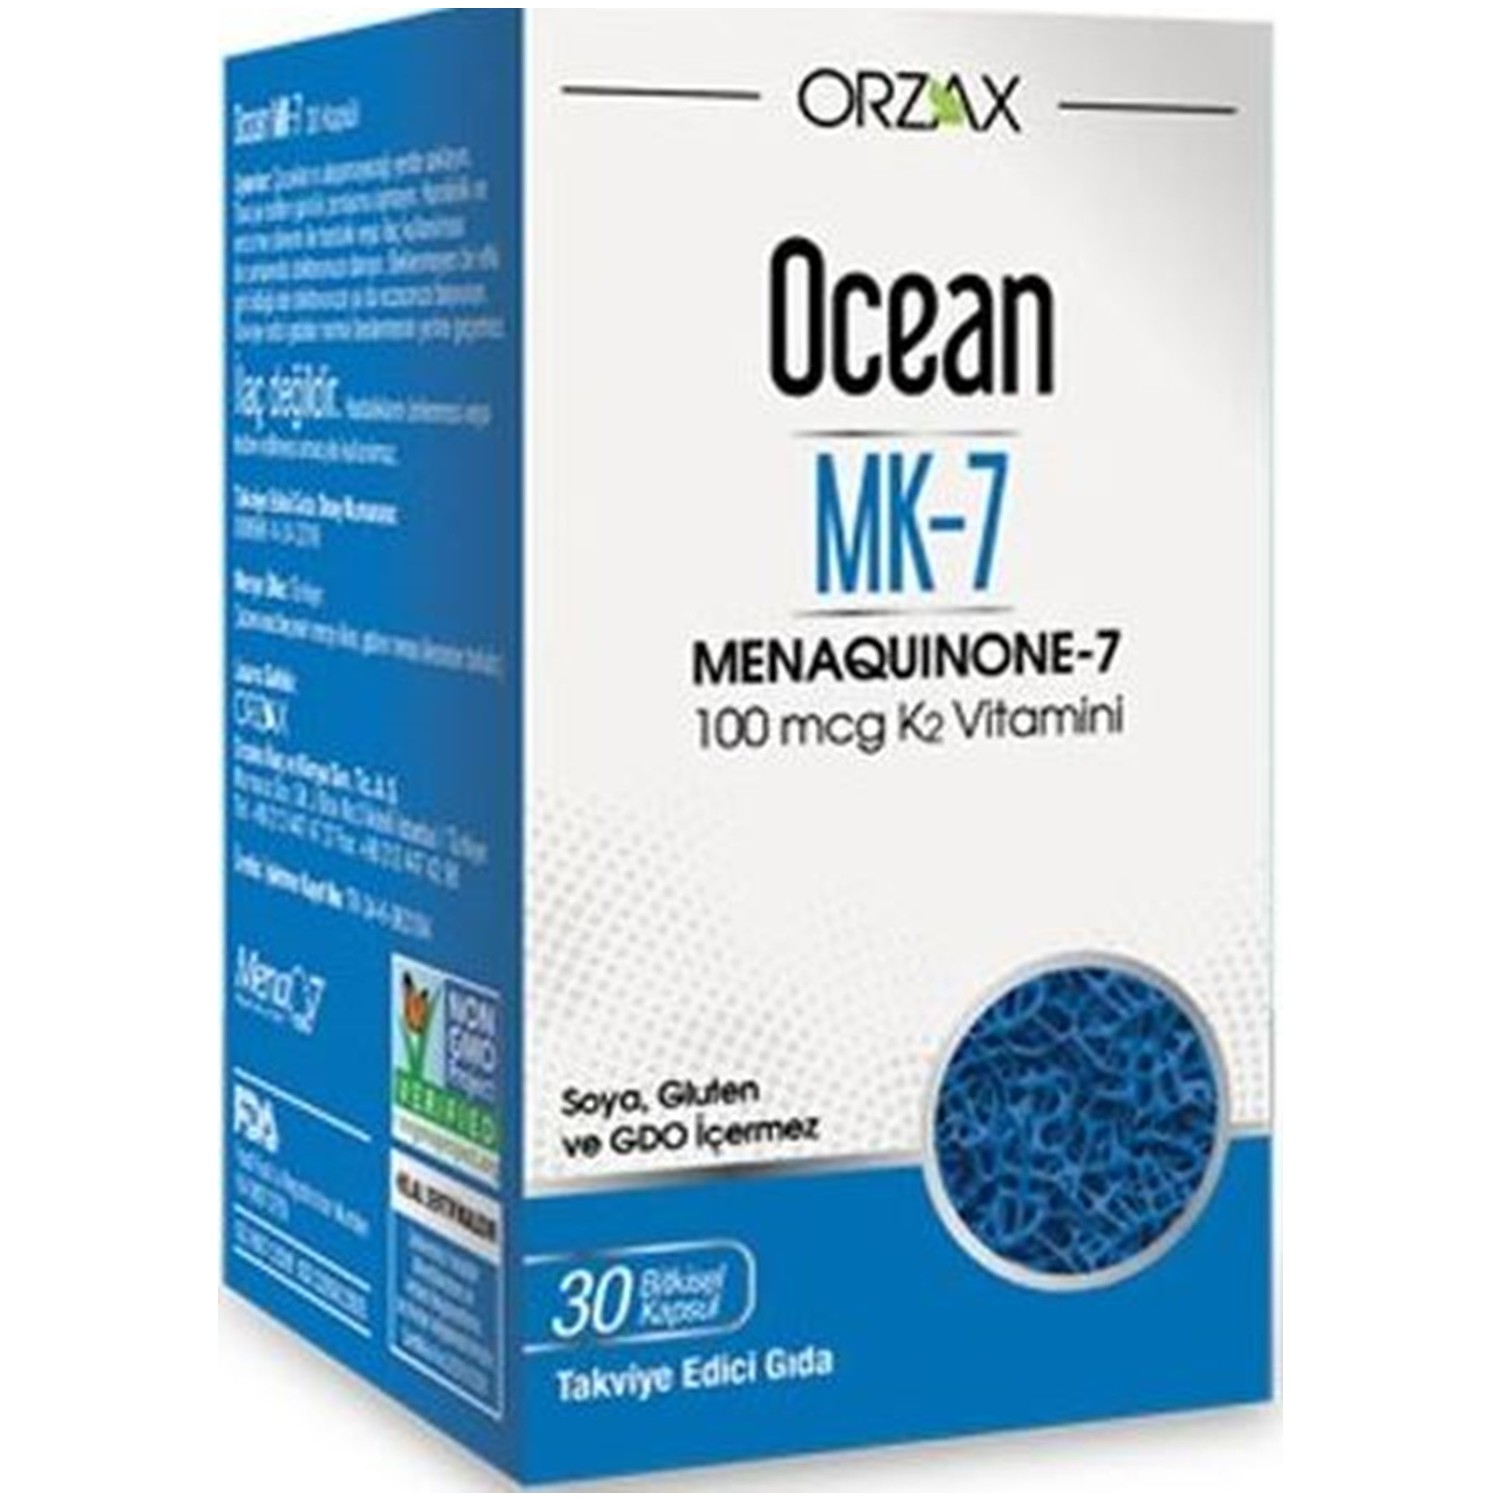 Пищевая добавка Orzax Ocean Mk-7 Vitamin К2 100 мкг, 30 капсул имунол orzax 40 капсул гель orzax для умывания лица 100 мл